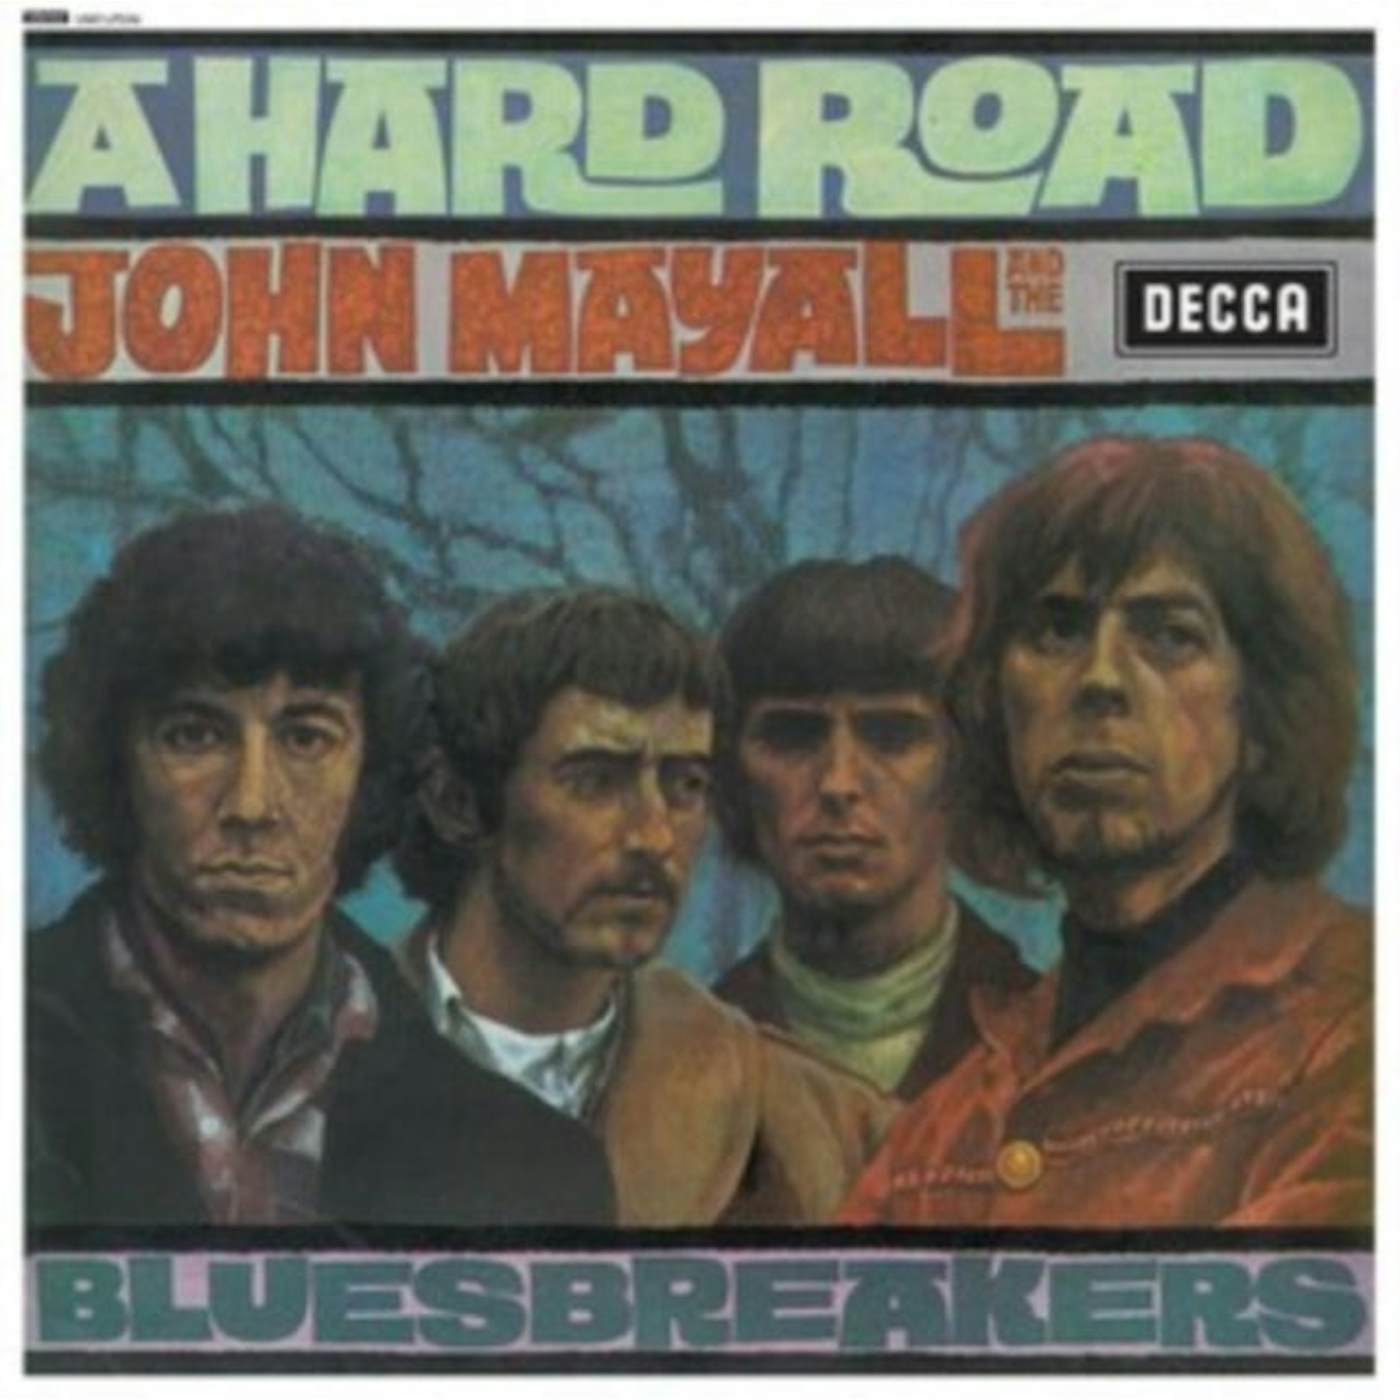 John Mayall & The Bluesbreakers LP - A Hard Road (Vinyl)